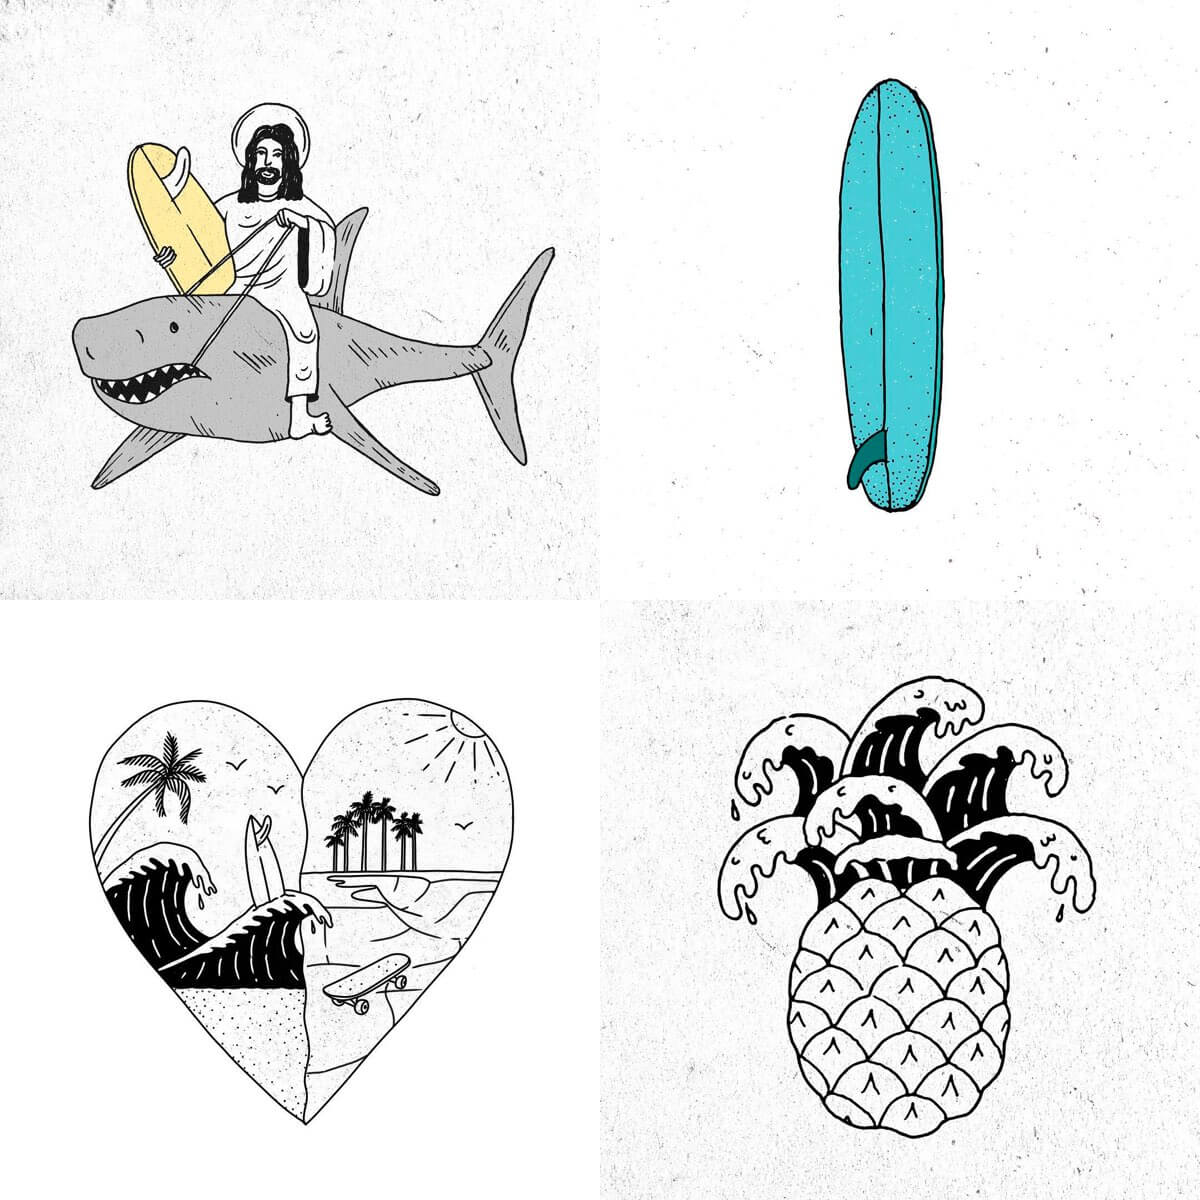 Surfing illustrations by Alina Scherbakova